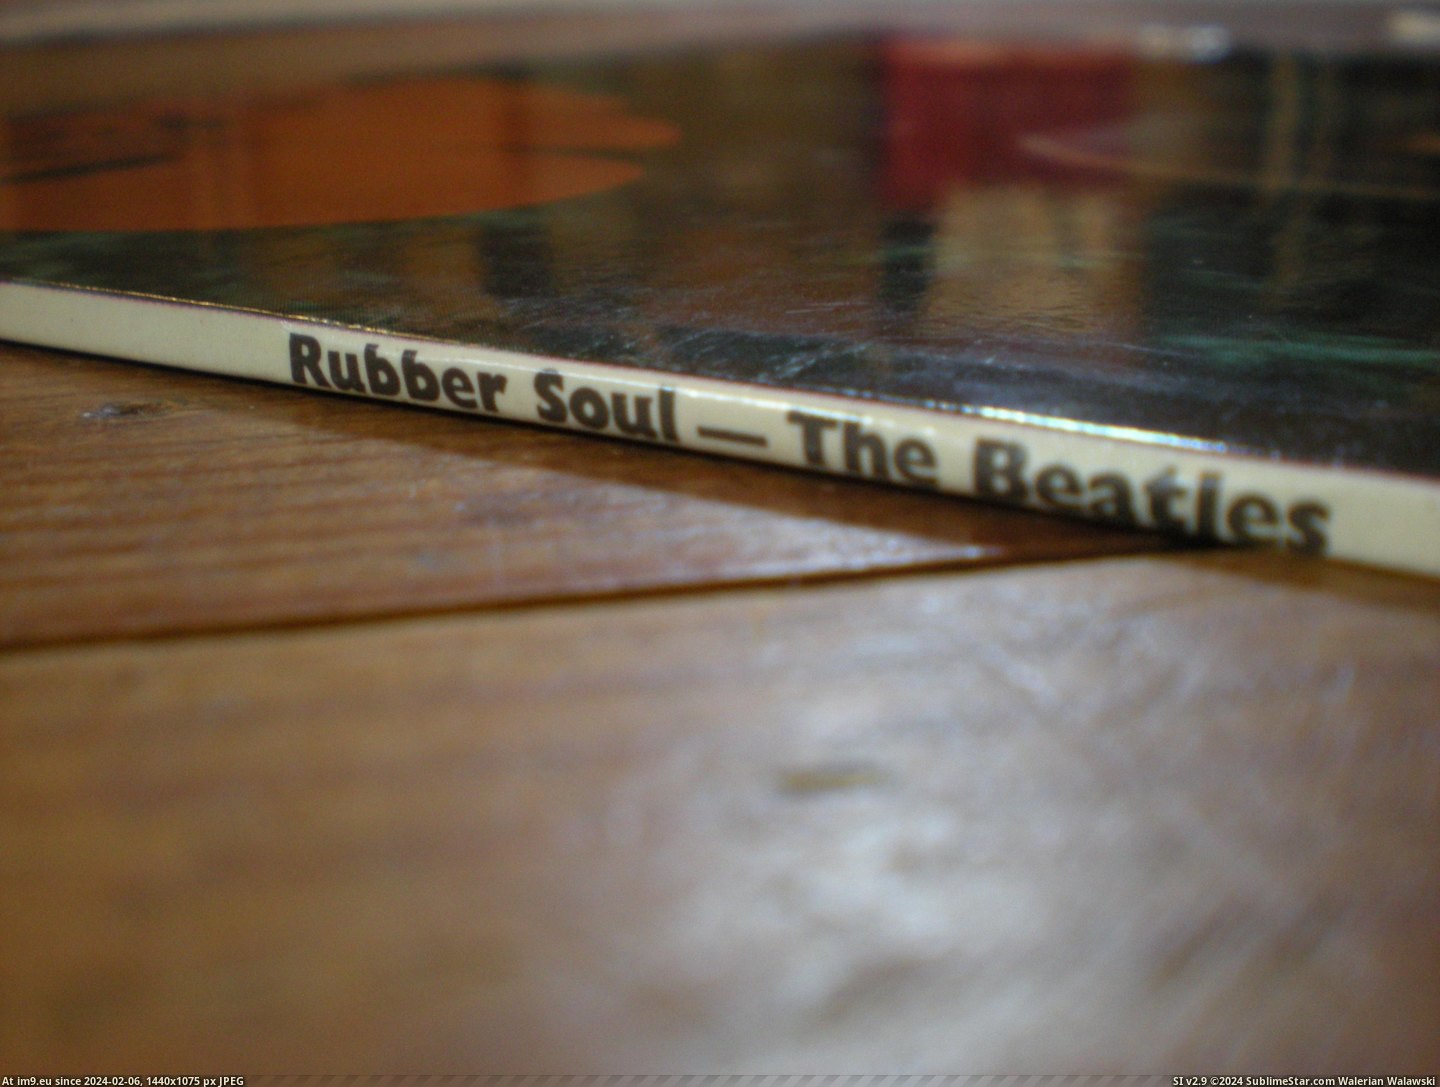  #Rubber  Rubber-4-4 7 Pic. (Изображение из альбом new 1))